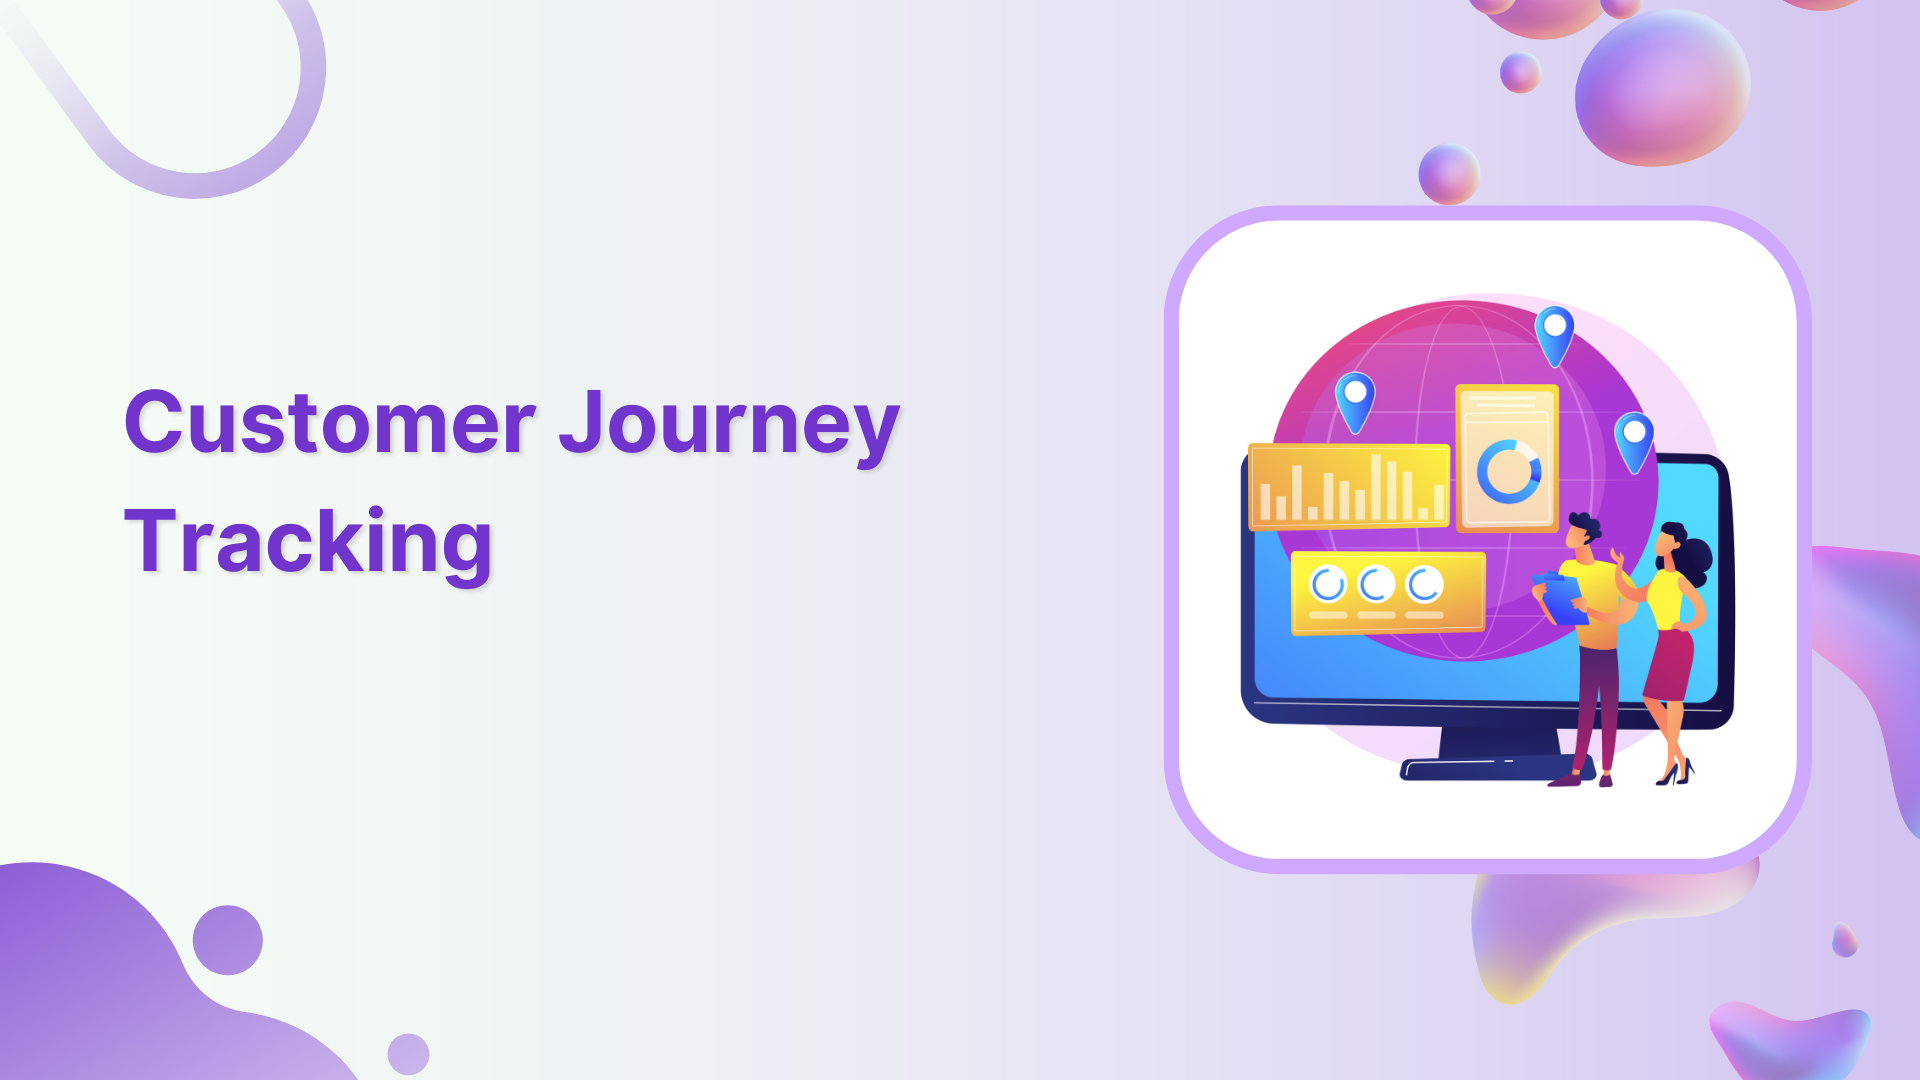 Customer journey tracking